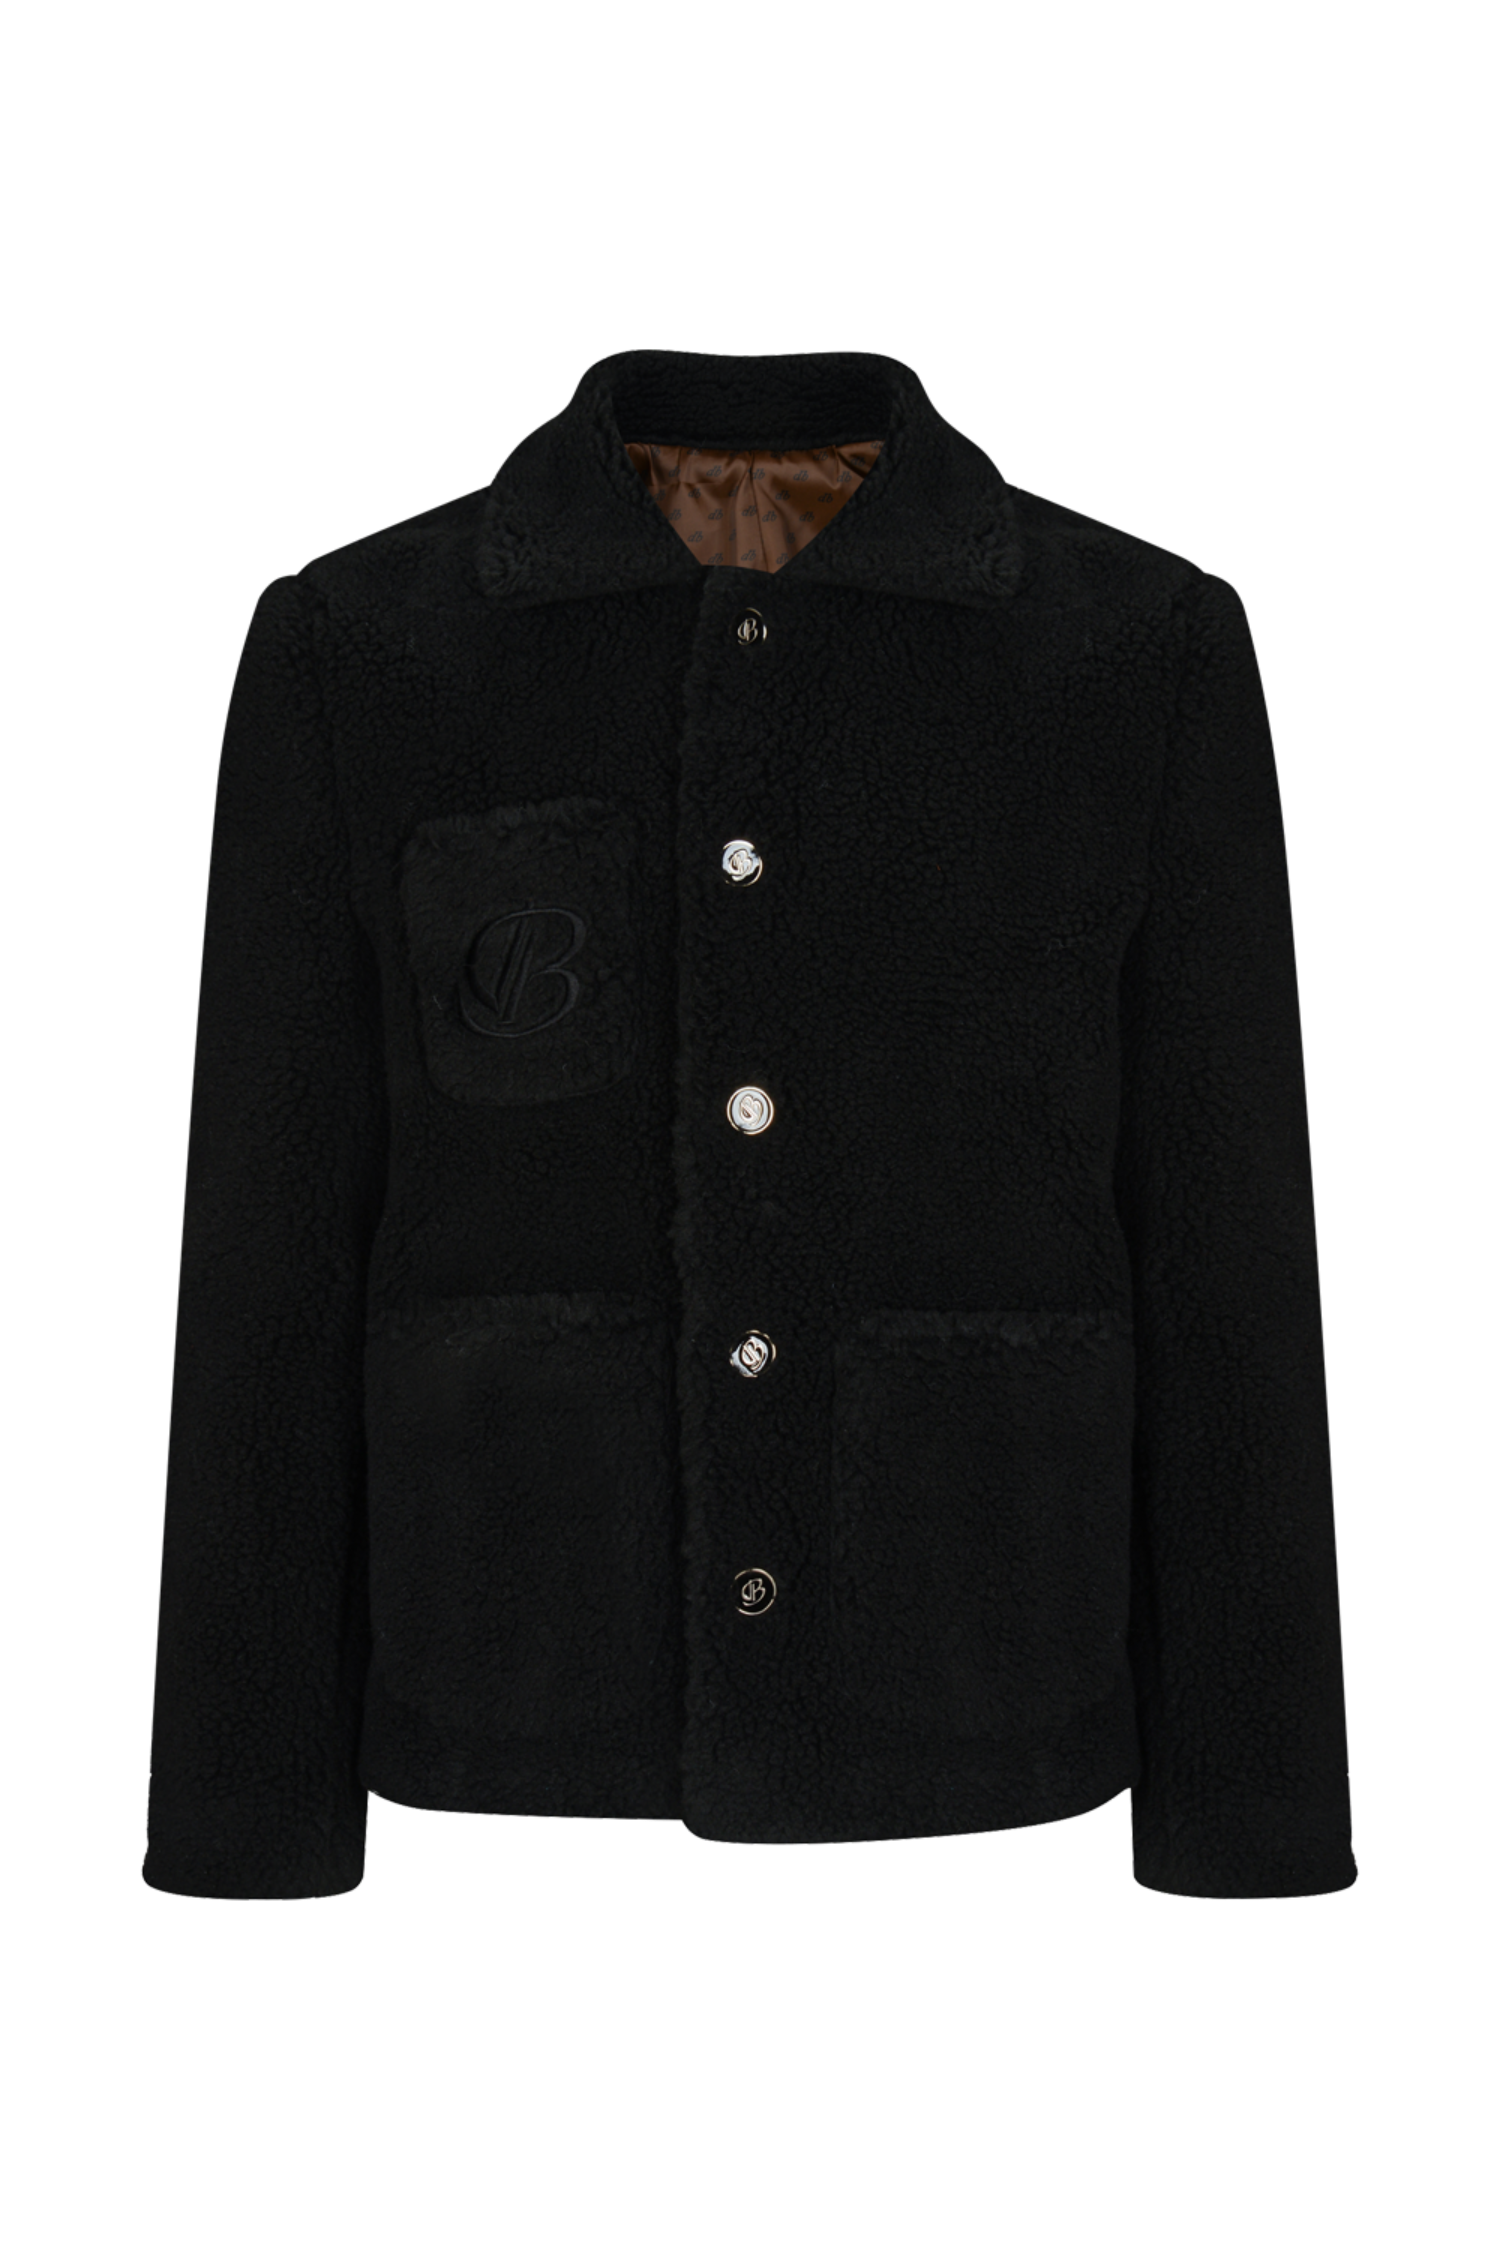 D:BEL블랙 Logo Wool Blend Fur Jacket